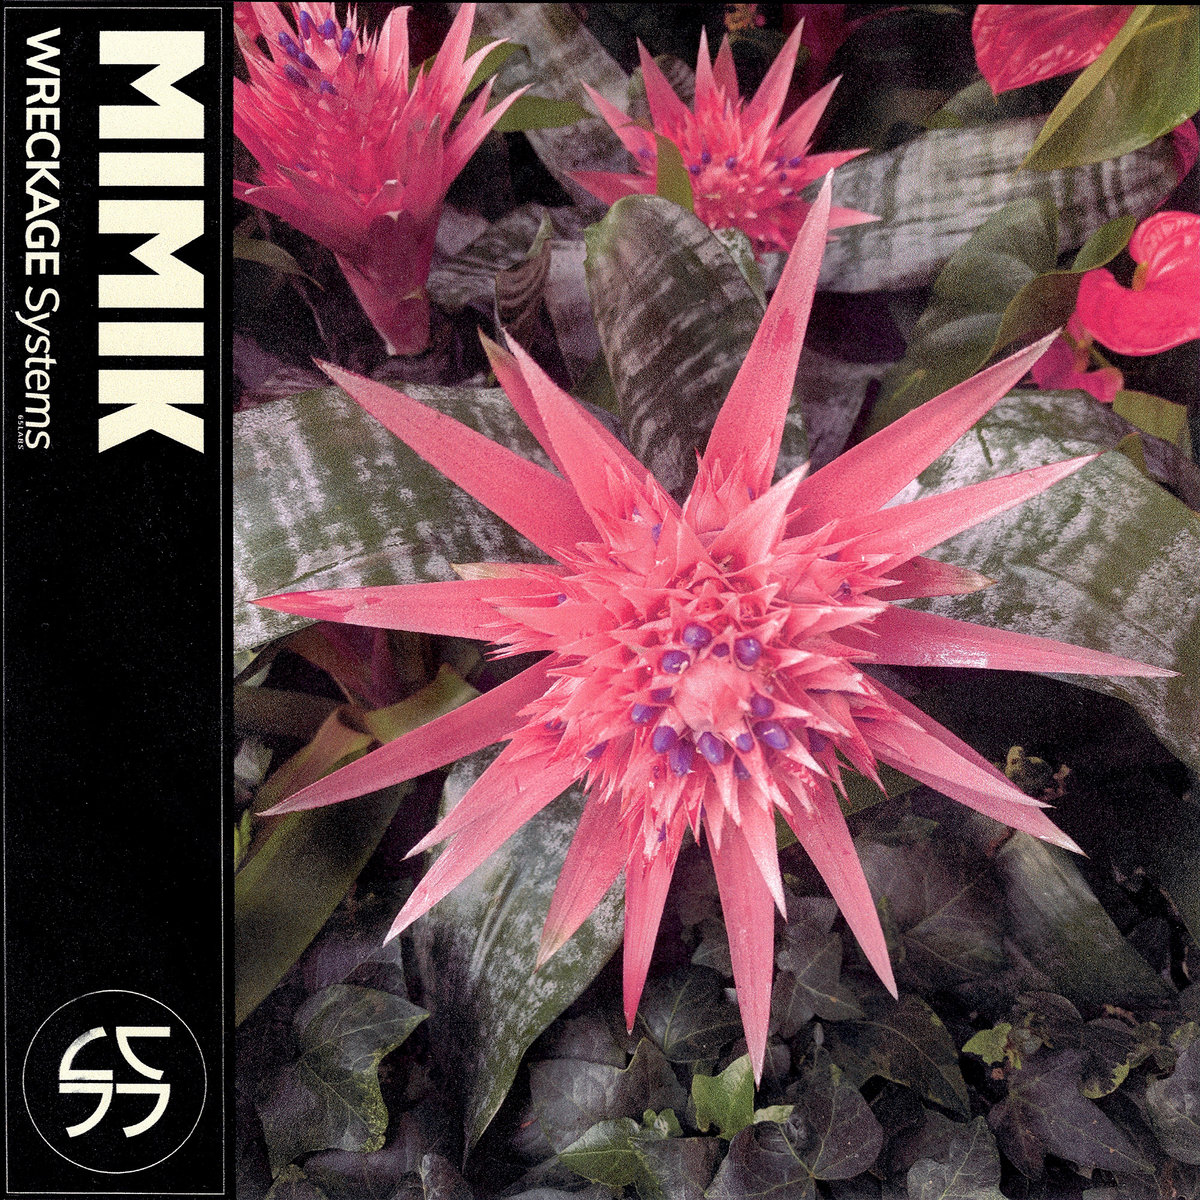 65daysofstatic - Mimik (EP) (2021) 24bit FLAC Download